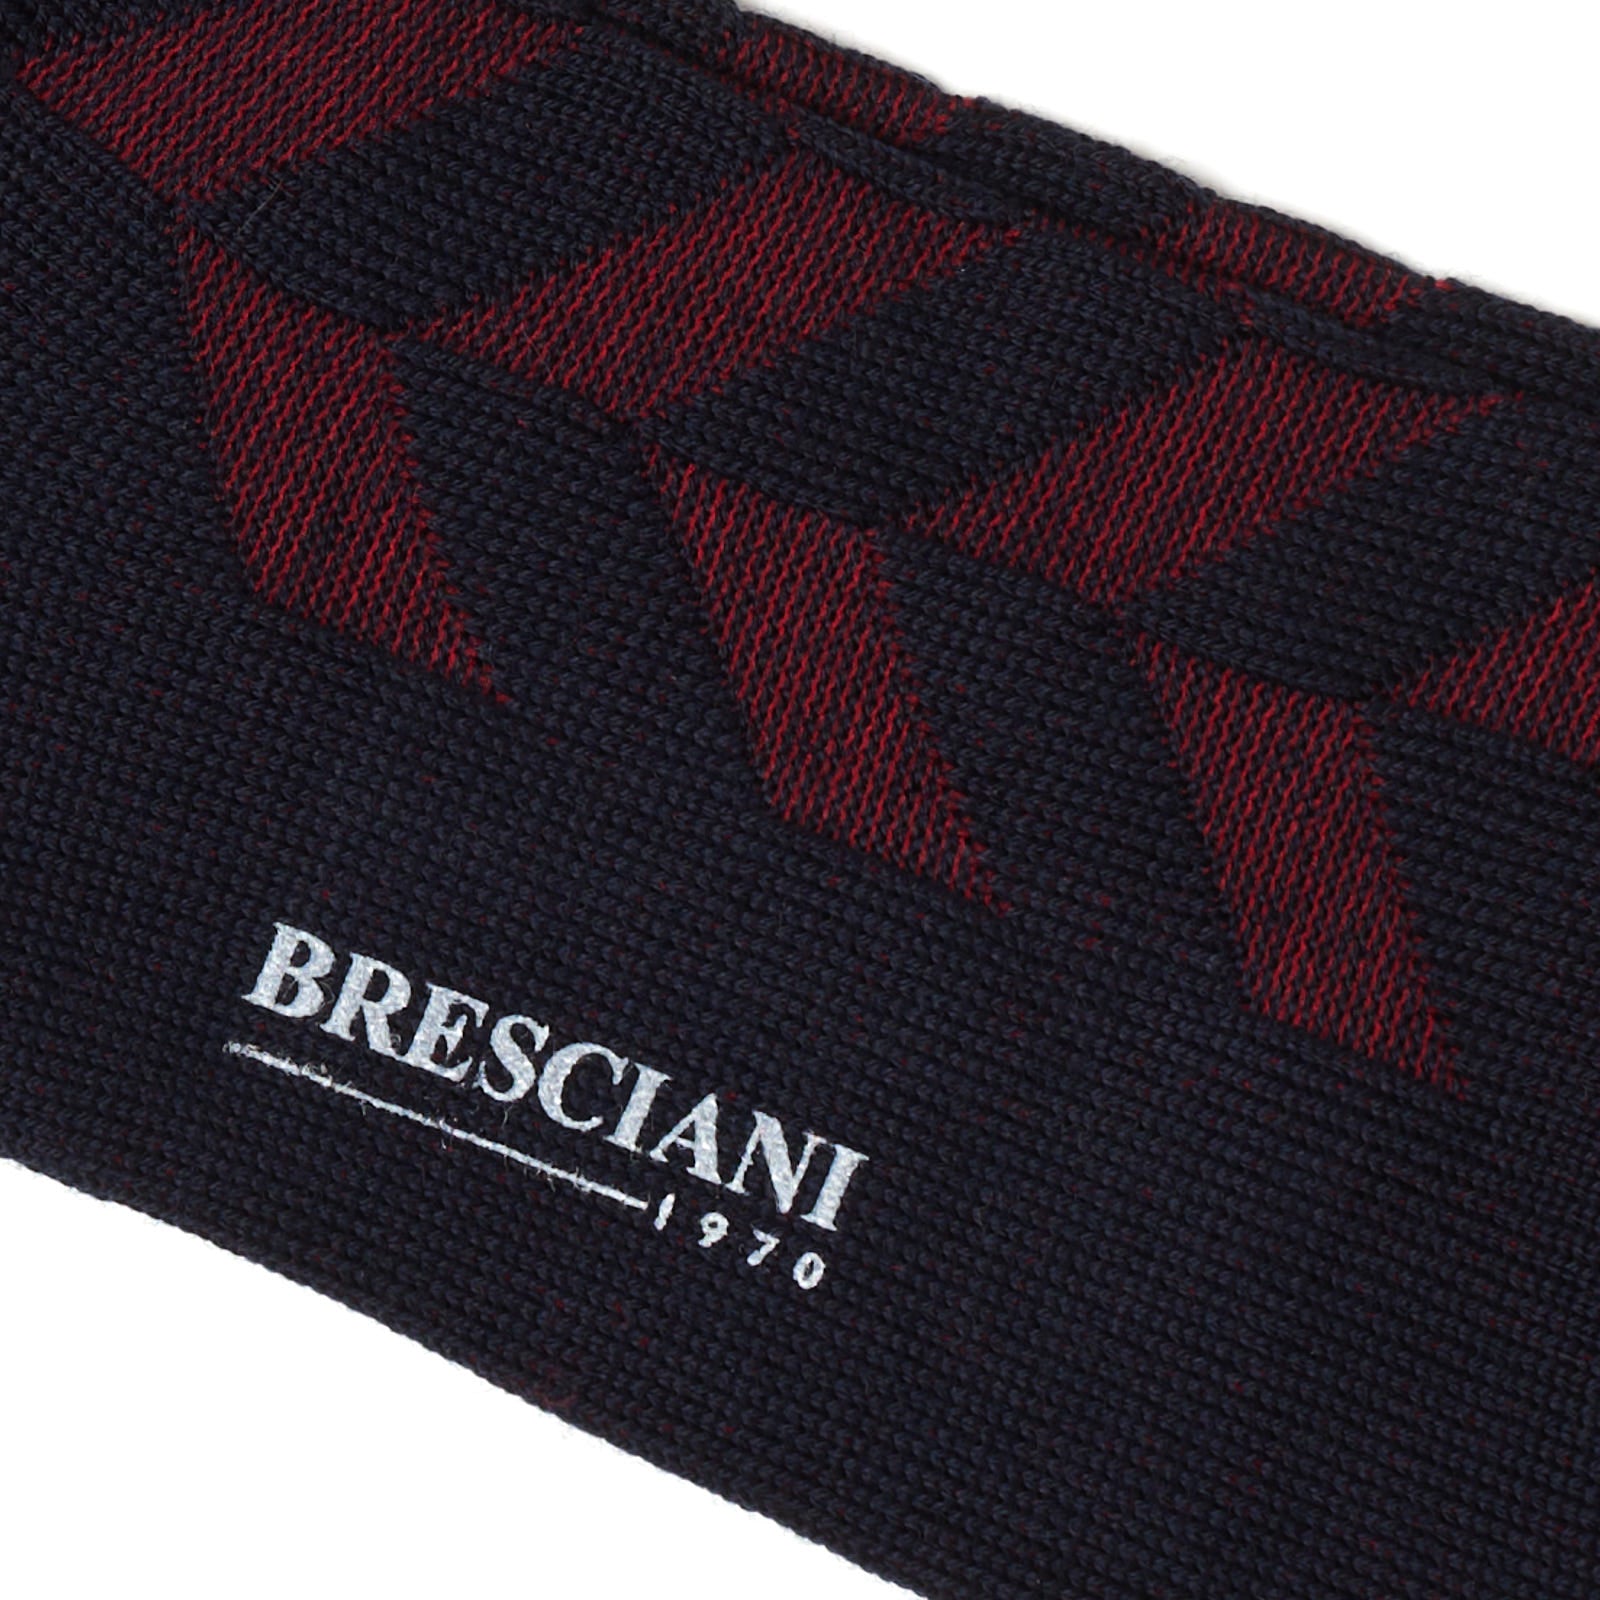 BRESCIANI Wool Geometry Micro-Design Mid Calf Length Socks US M-L BRESCIANI